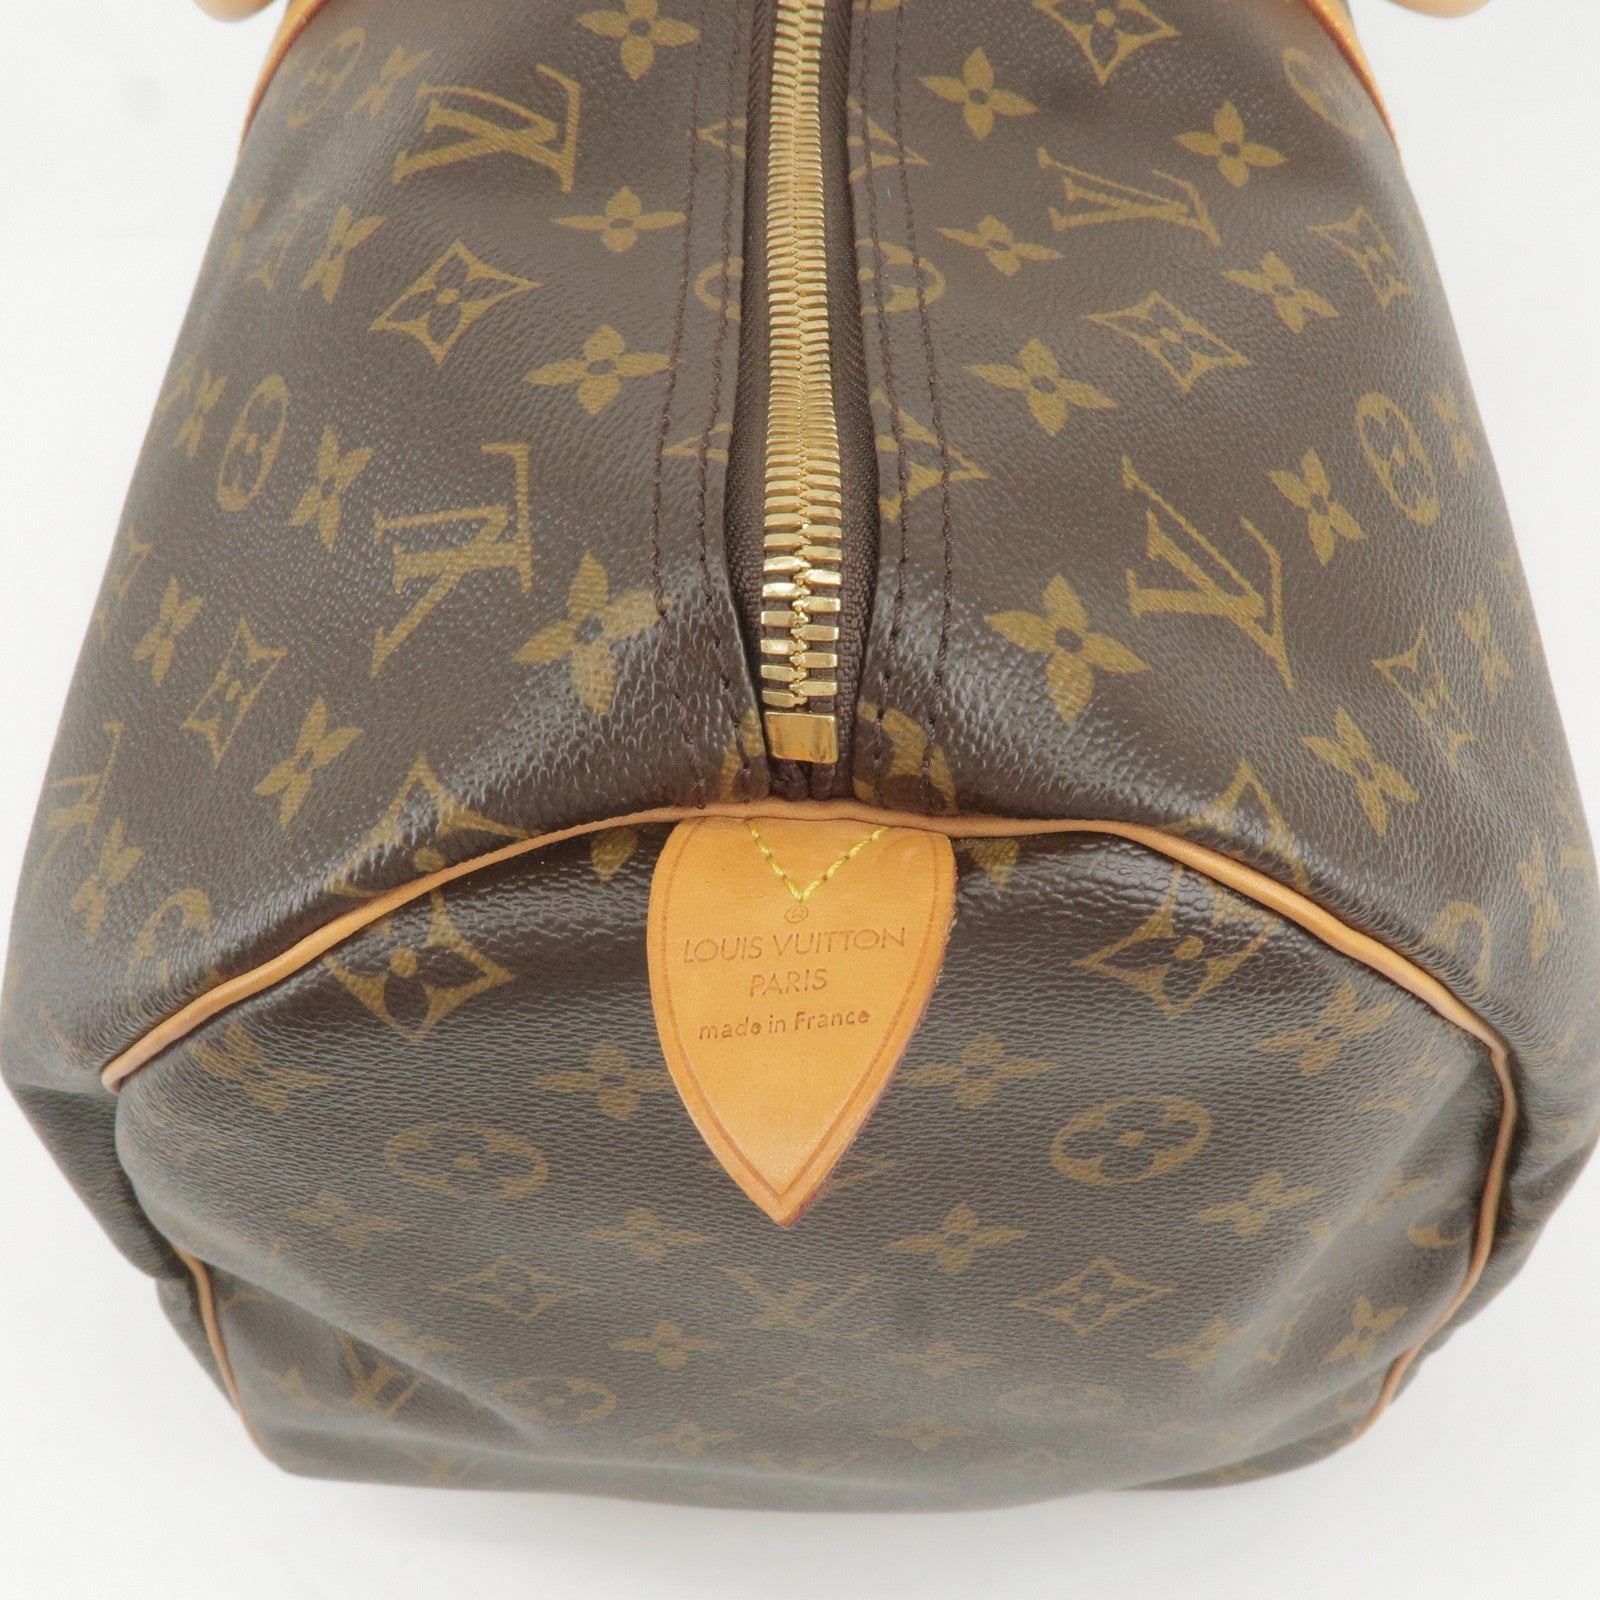 Excellent condition Louis Vuitton LV utility crossbody bag, Luxury